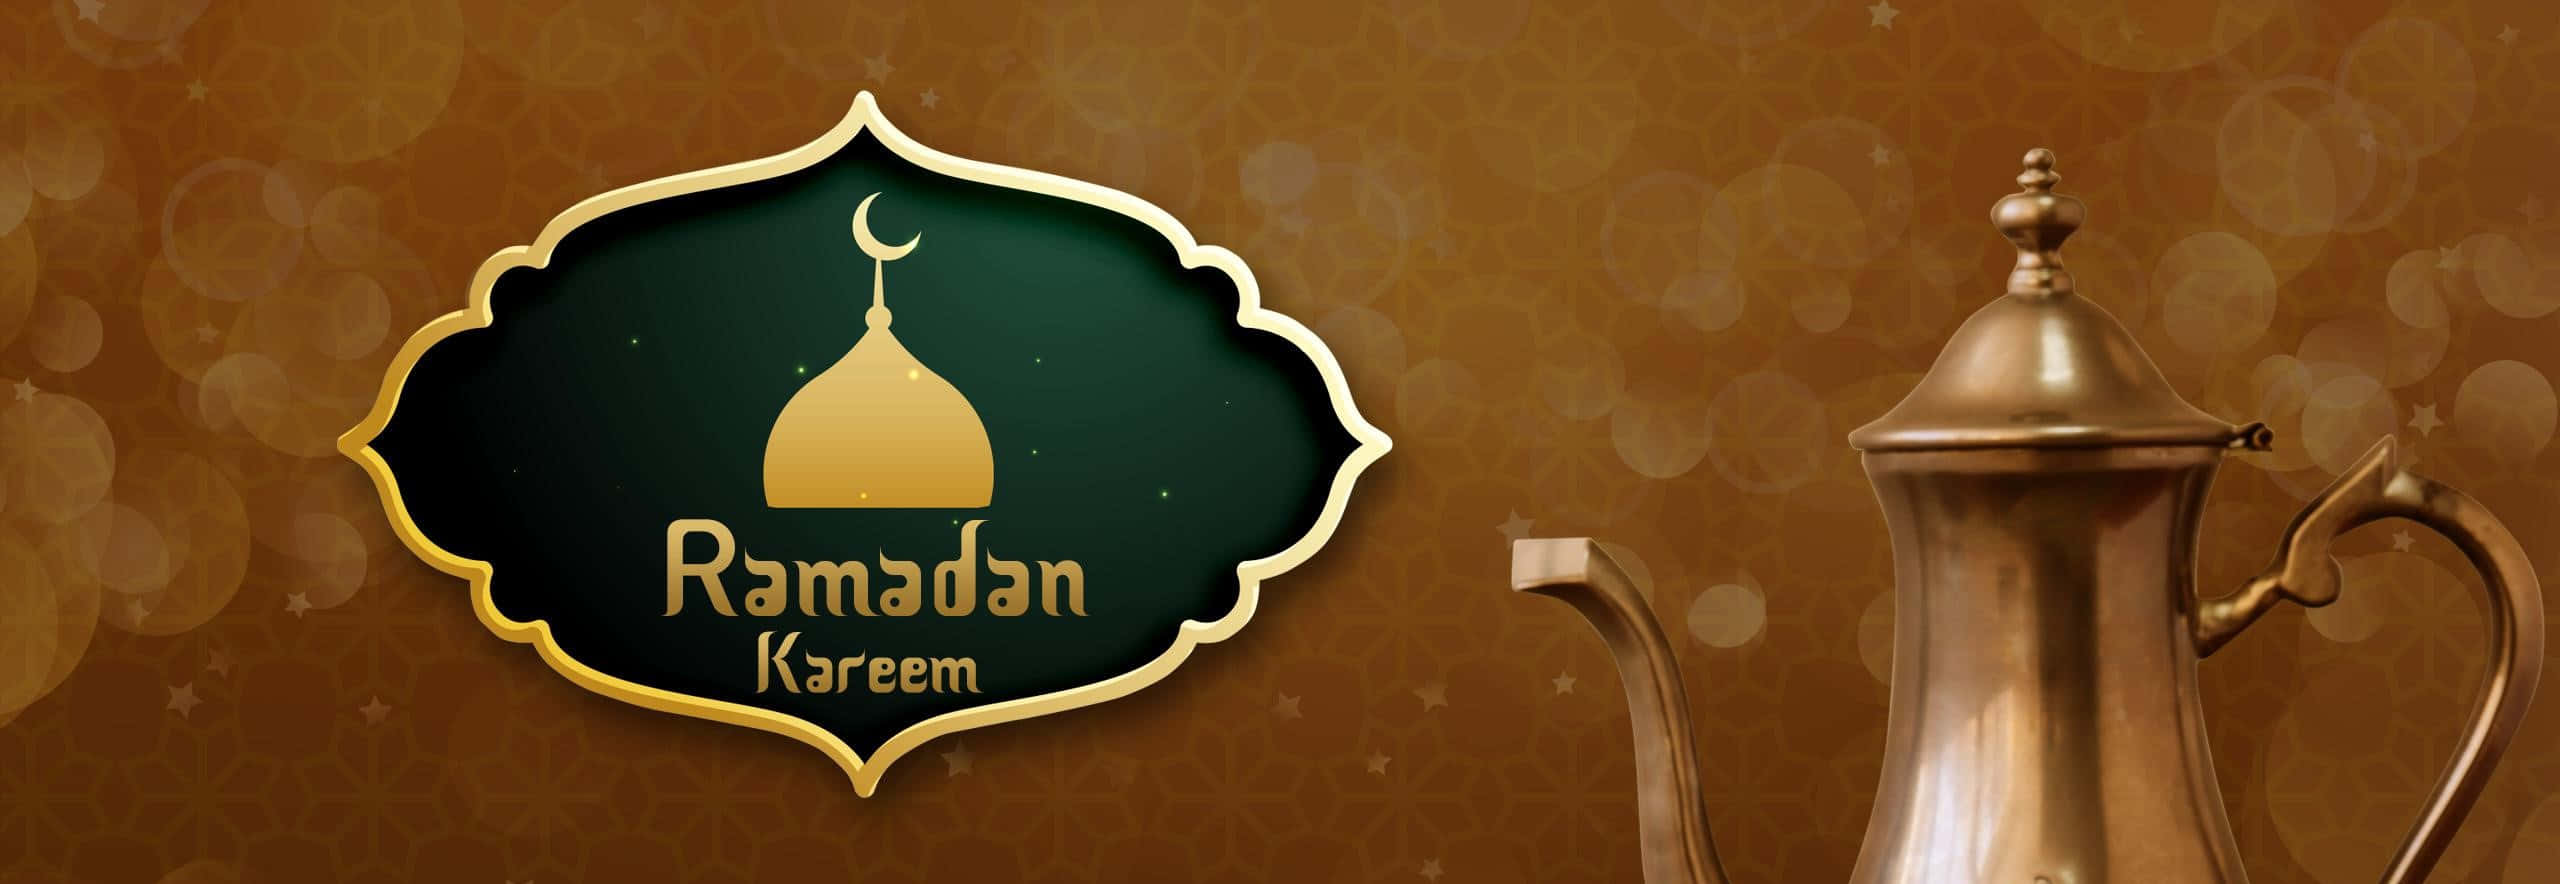 Imagemde Ramadan Kareem